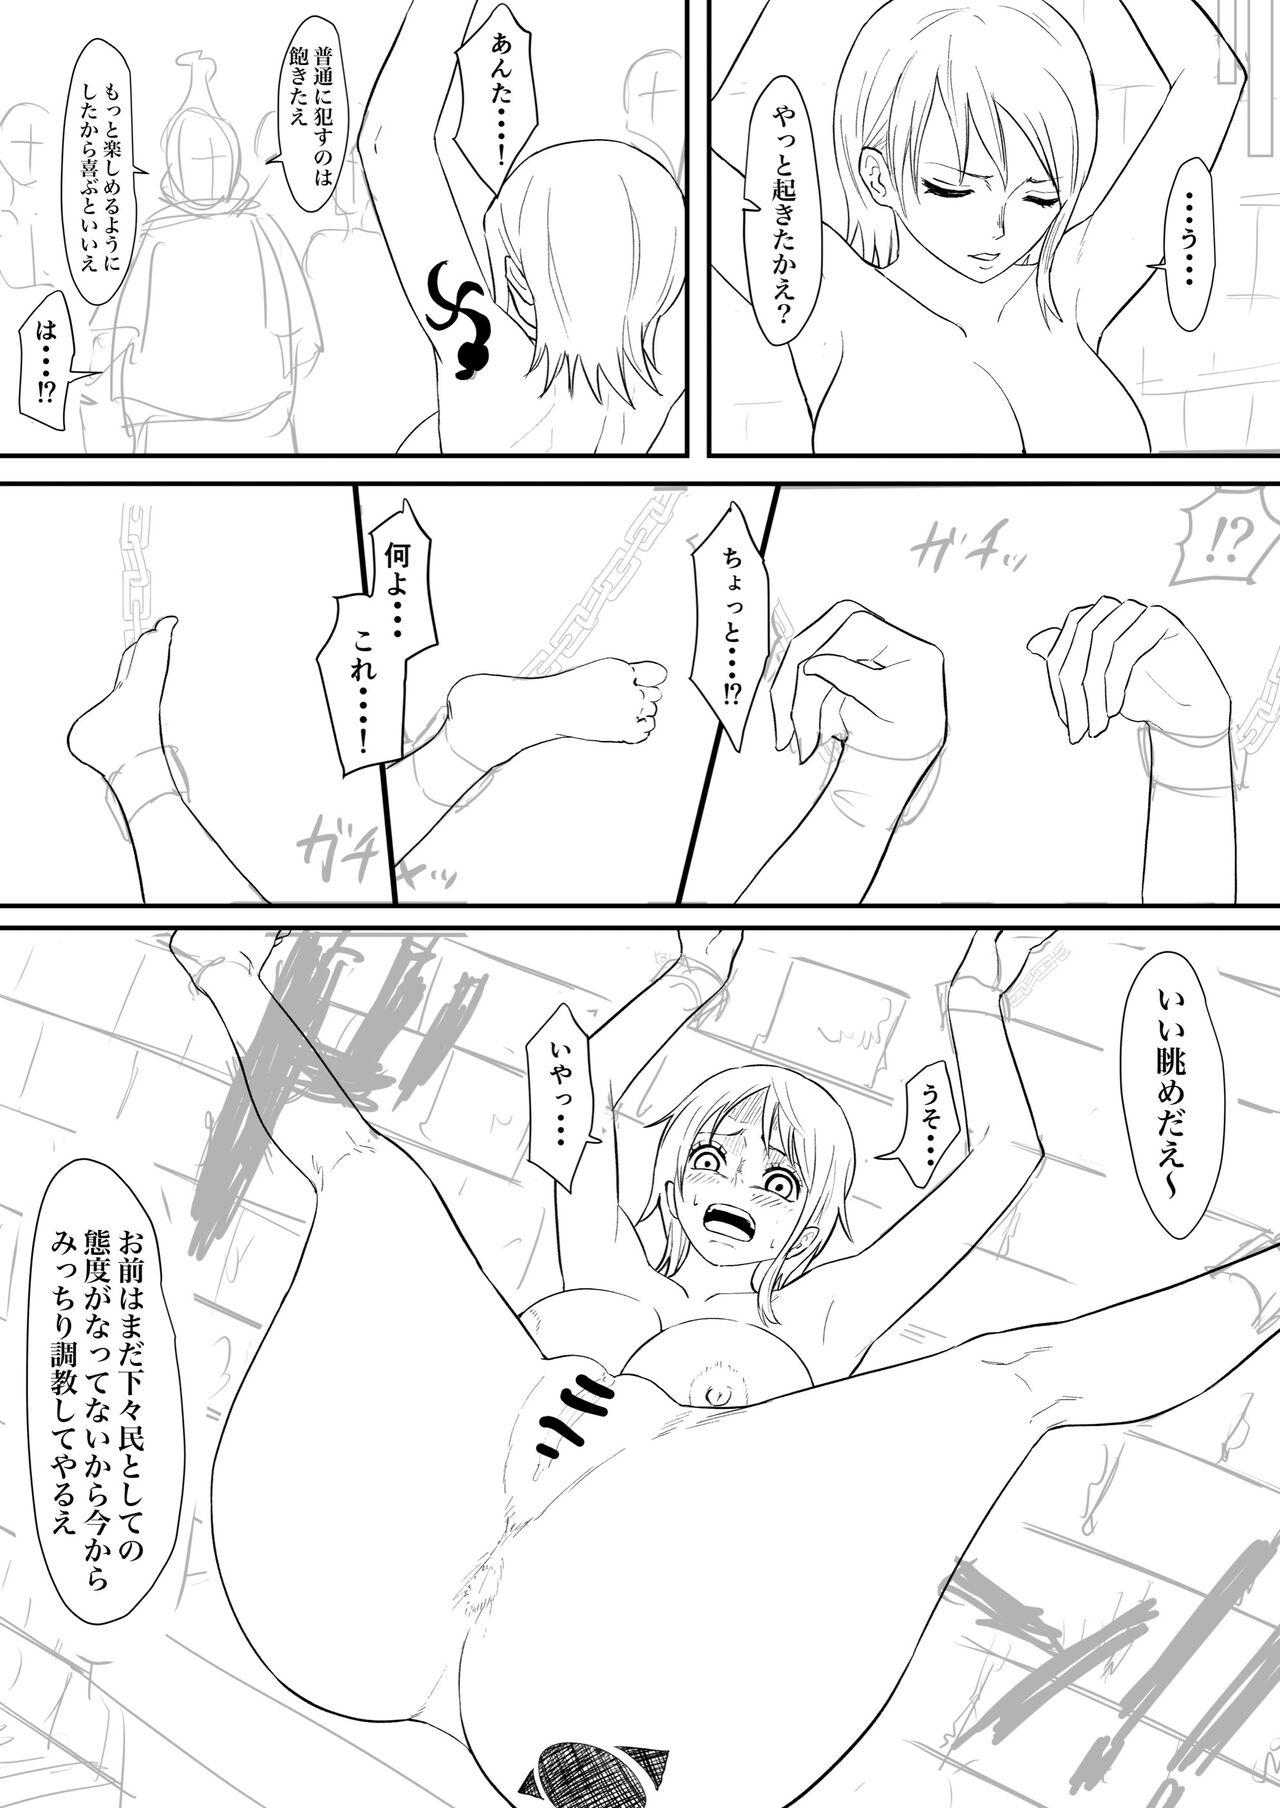 Sesso Nami Manga - One piece Cheerleader - Page 9